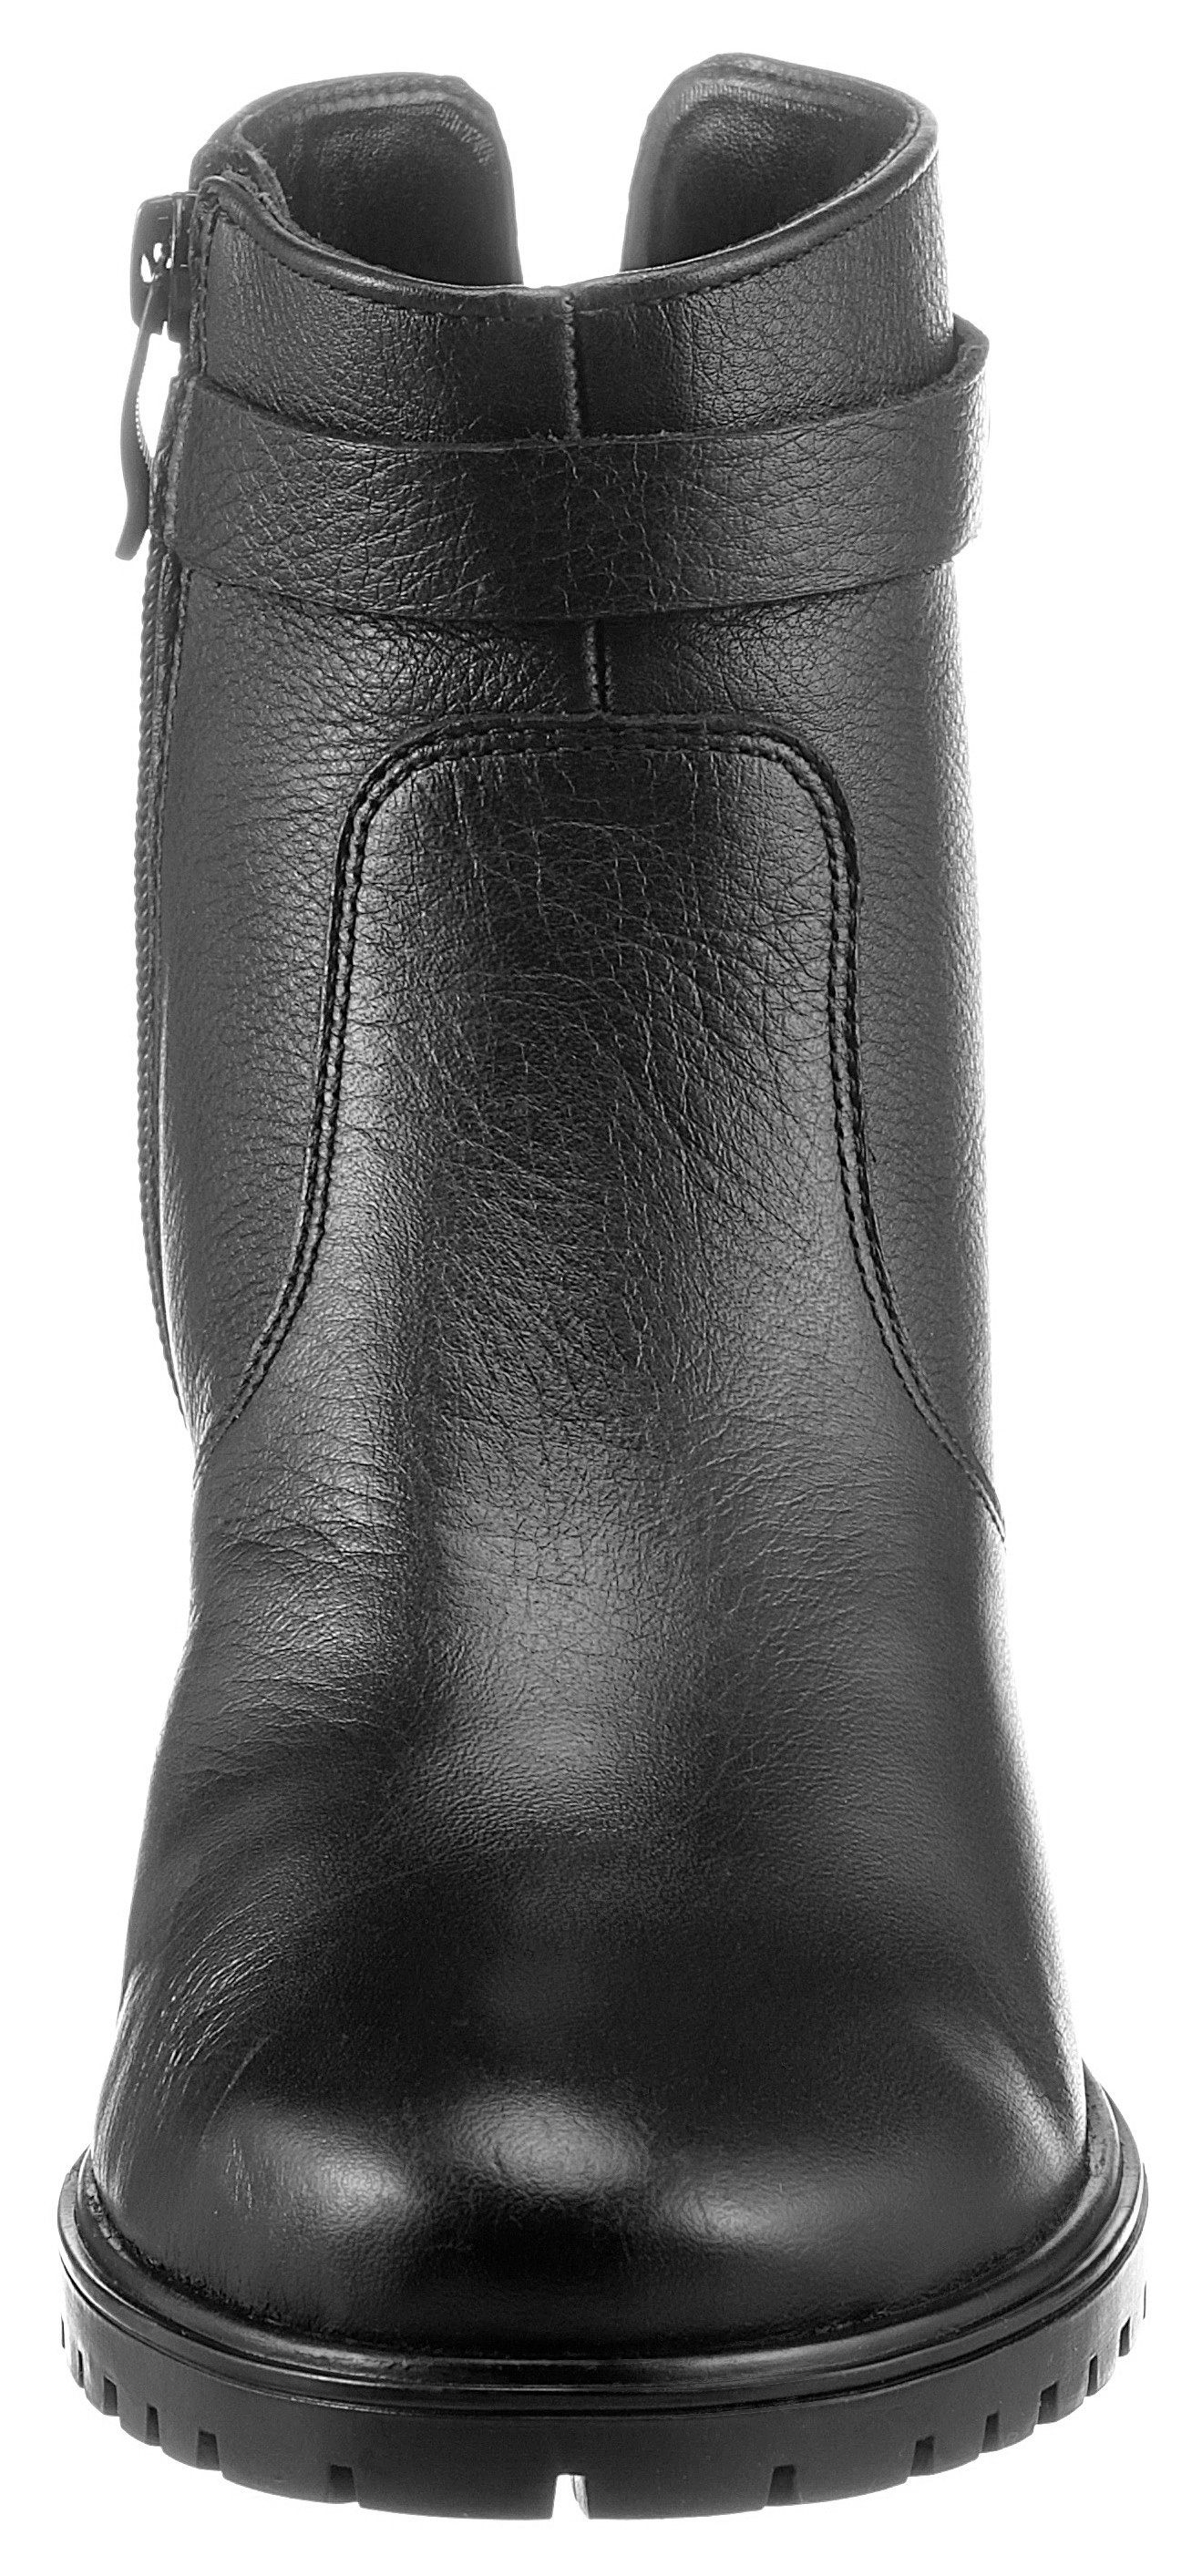 Ara RONDA Stiefelette in schwarz klassischer G-Weite Optik